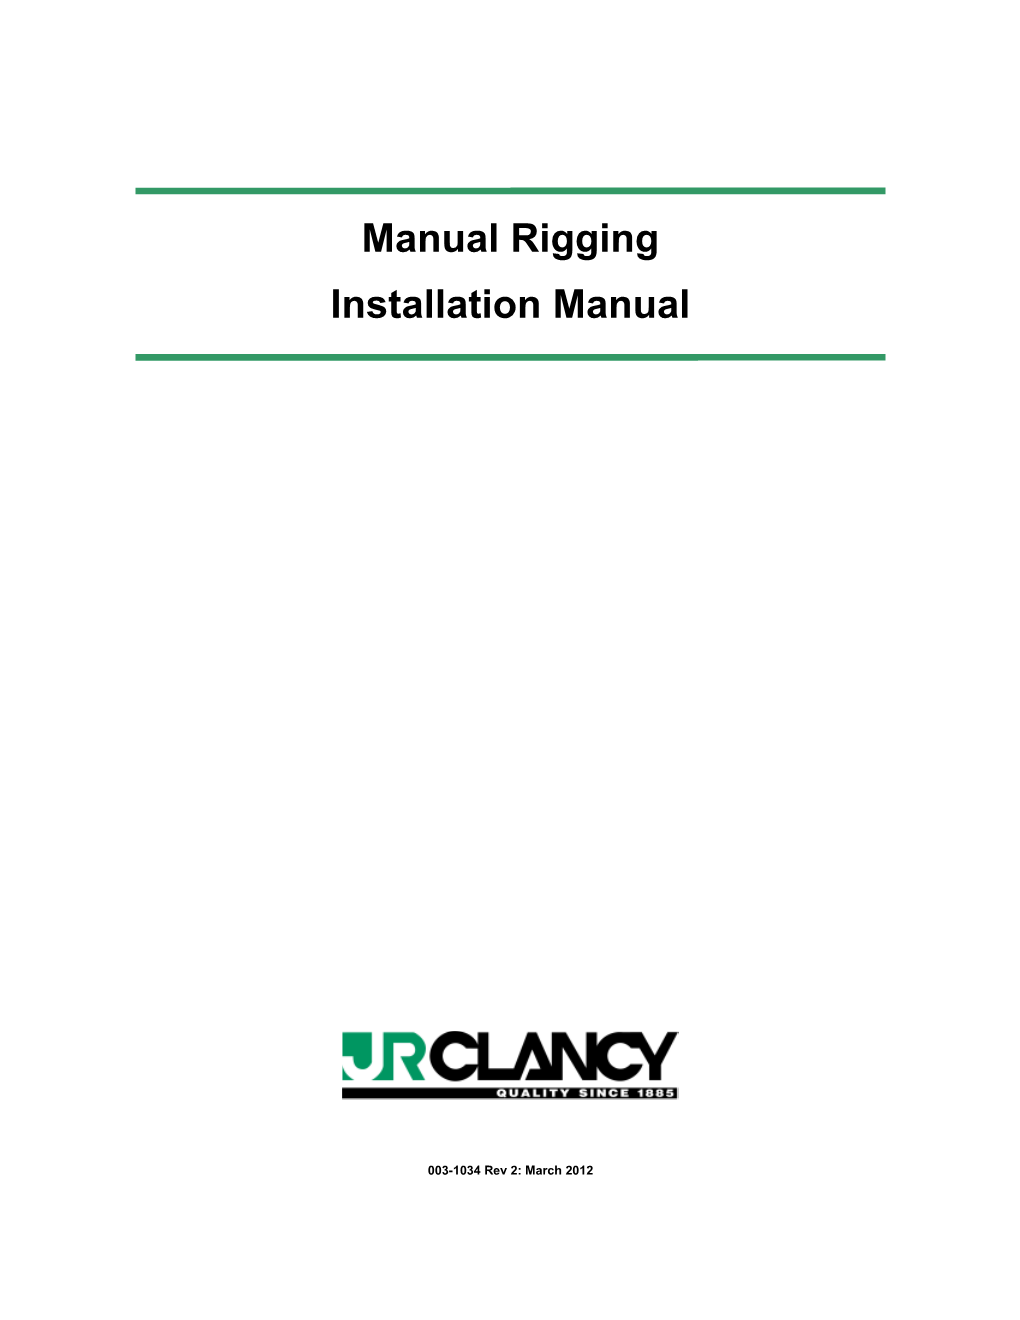 Manual Rigging Installation Manual